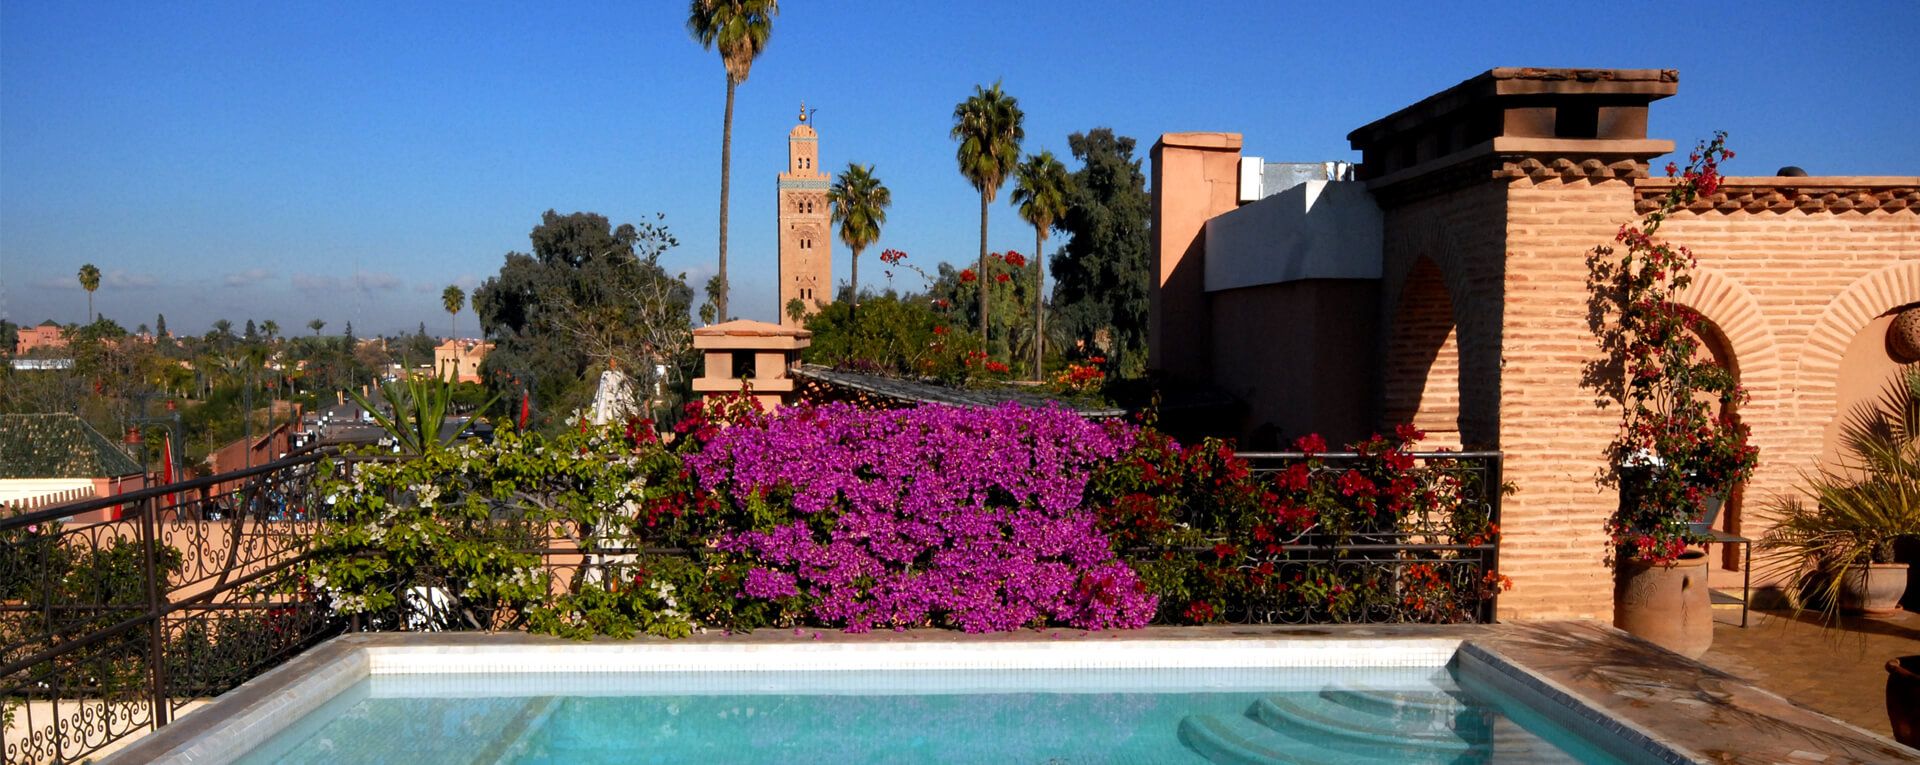 La Villa des Orangers, Marrakech